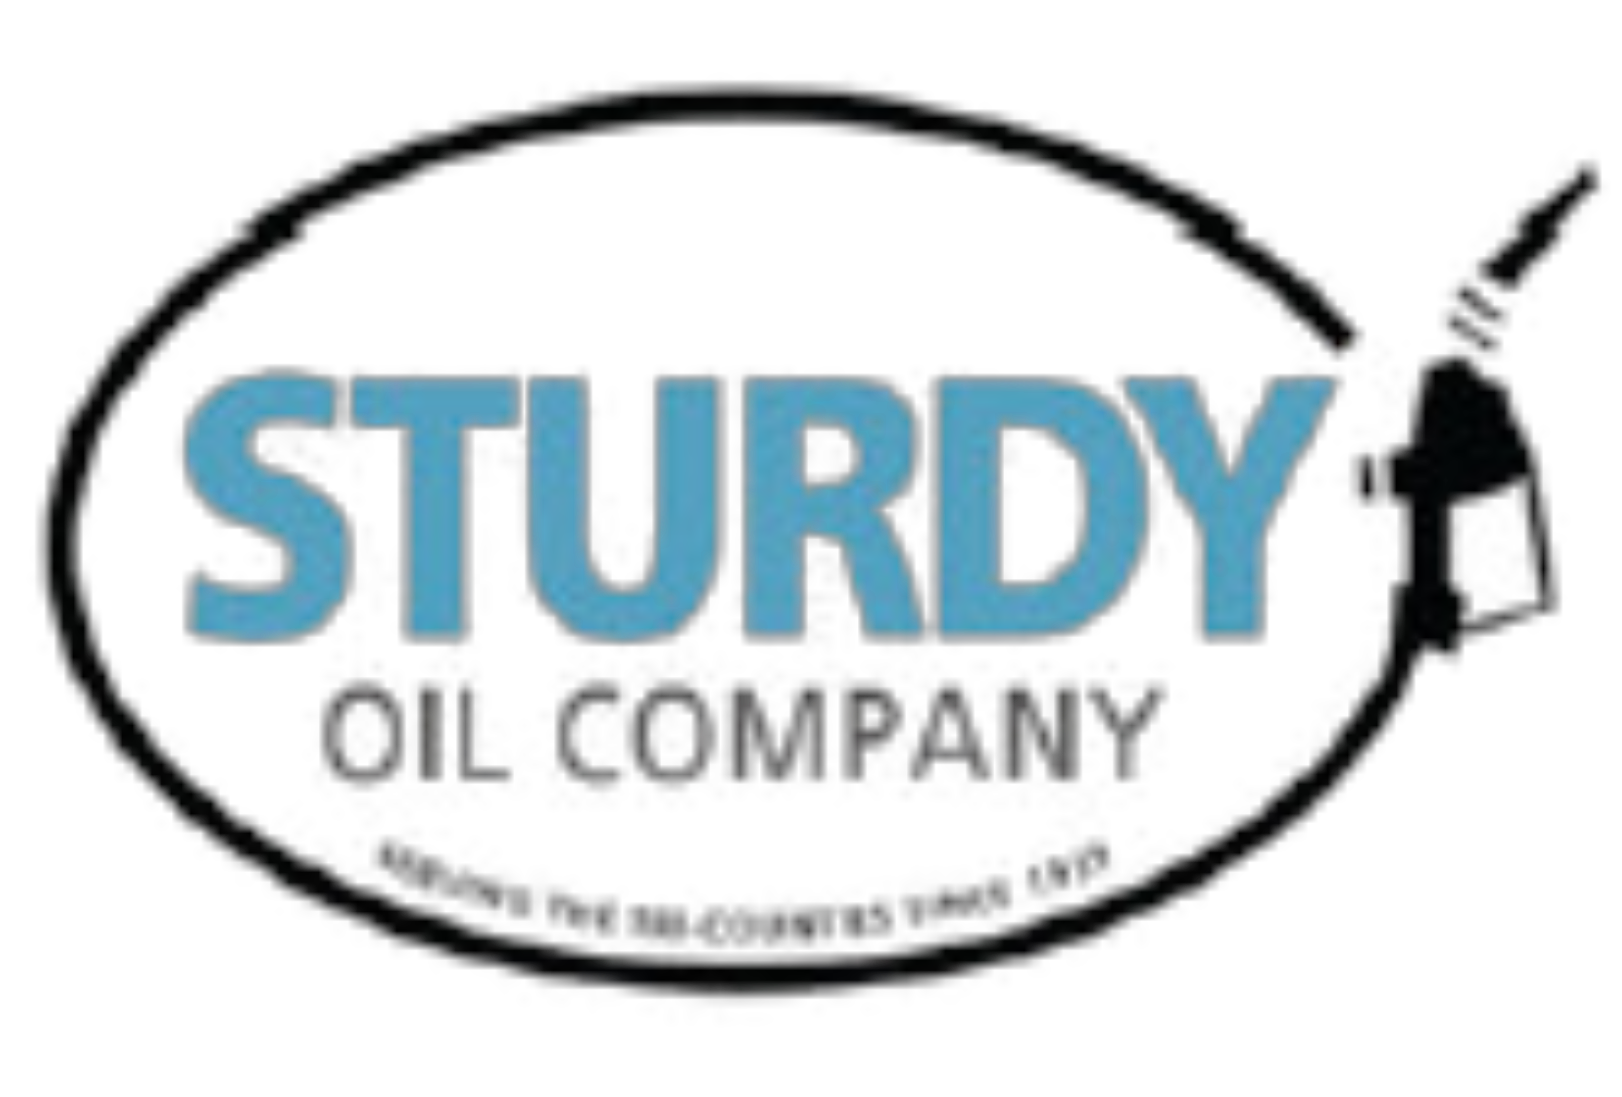 Sturdy Oil Company